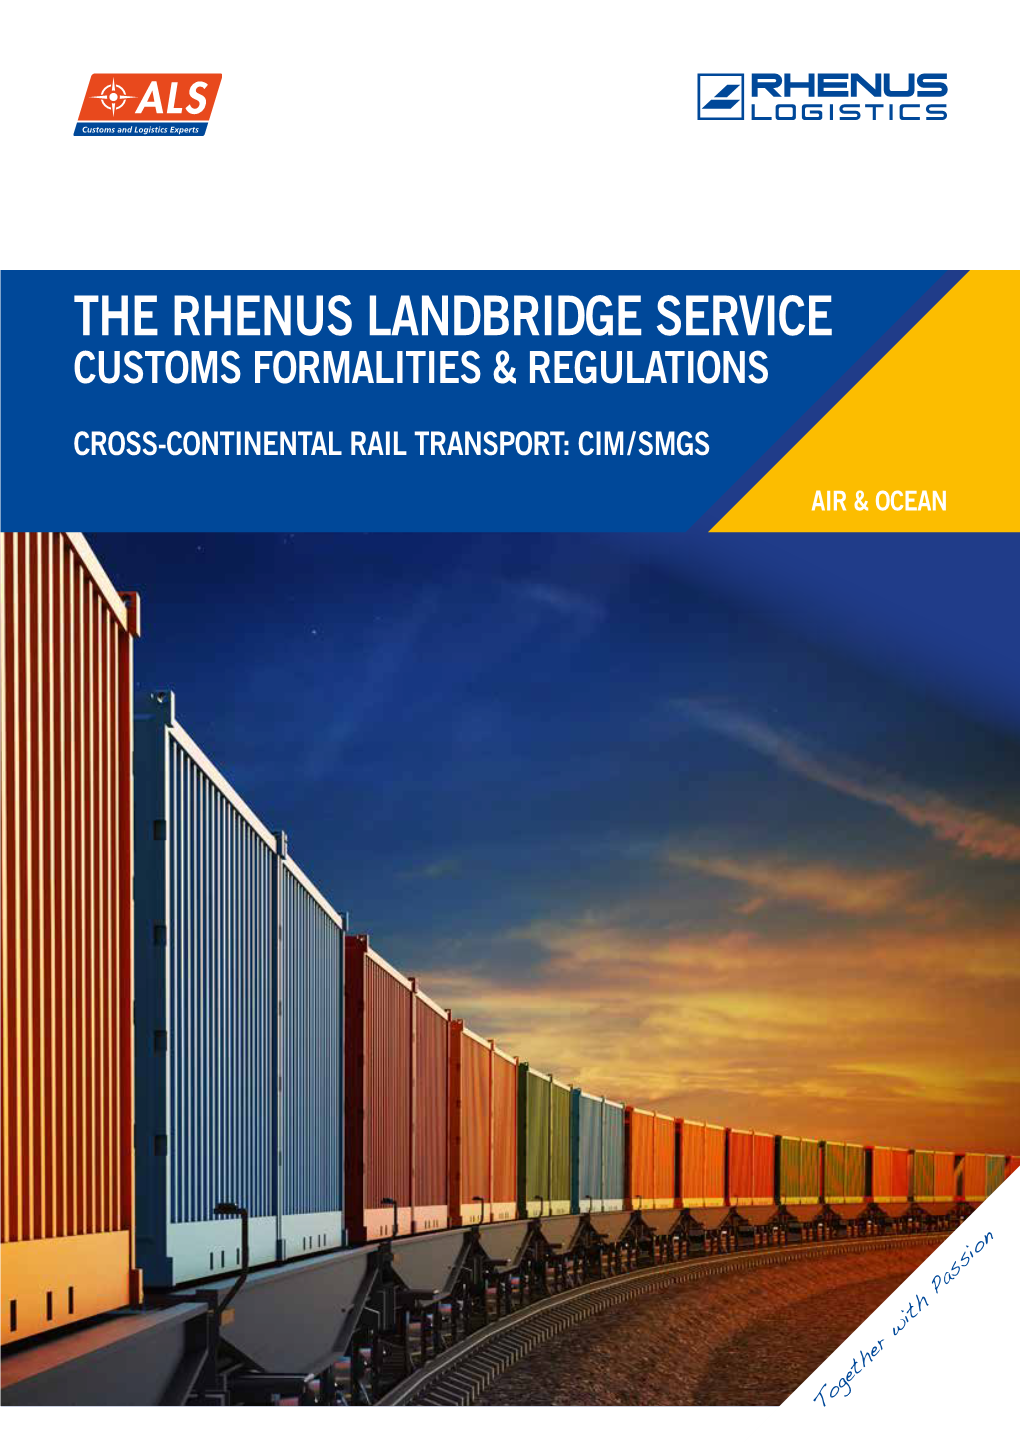 The Rhenus Landbridge Service Customs Formalities & Regulations